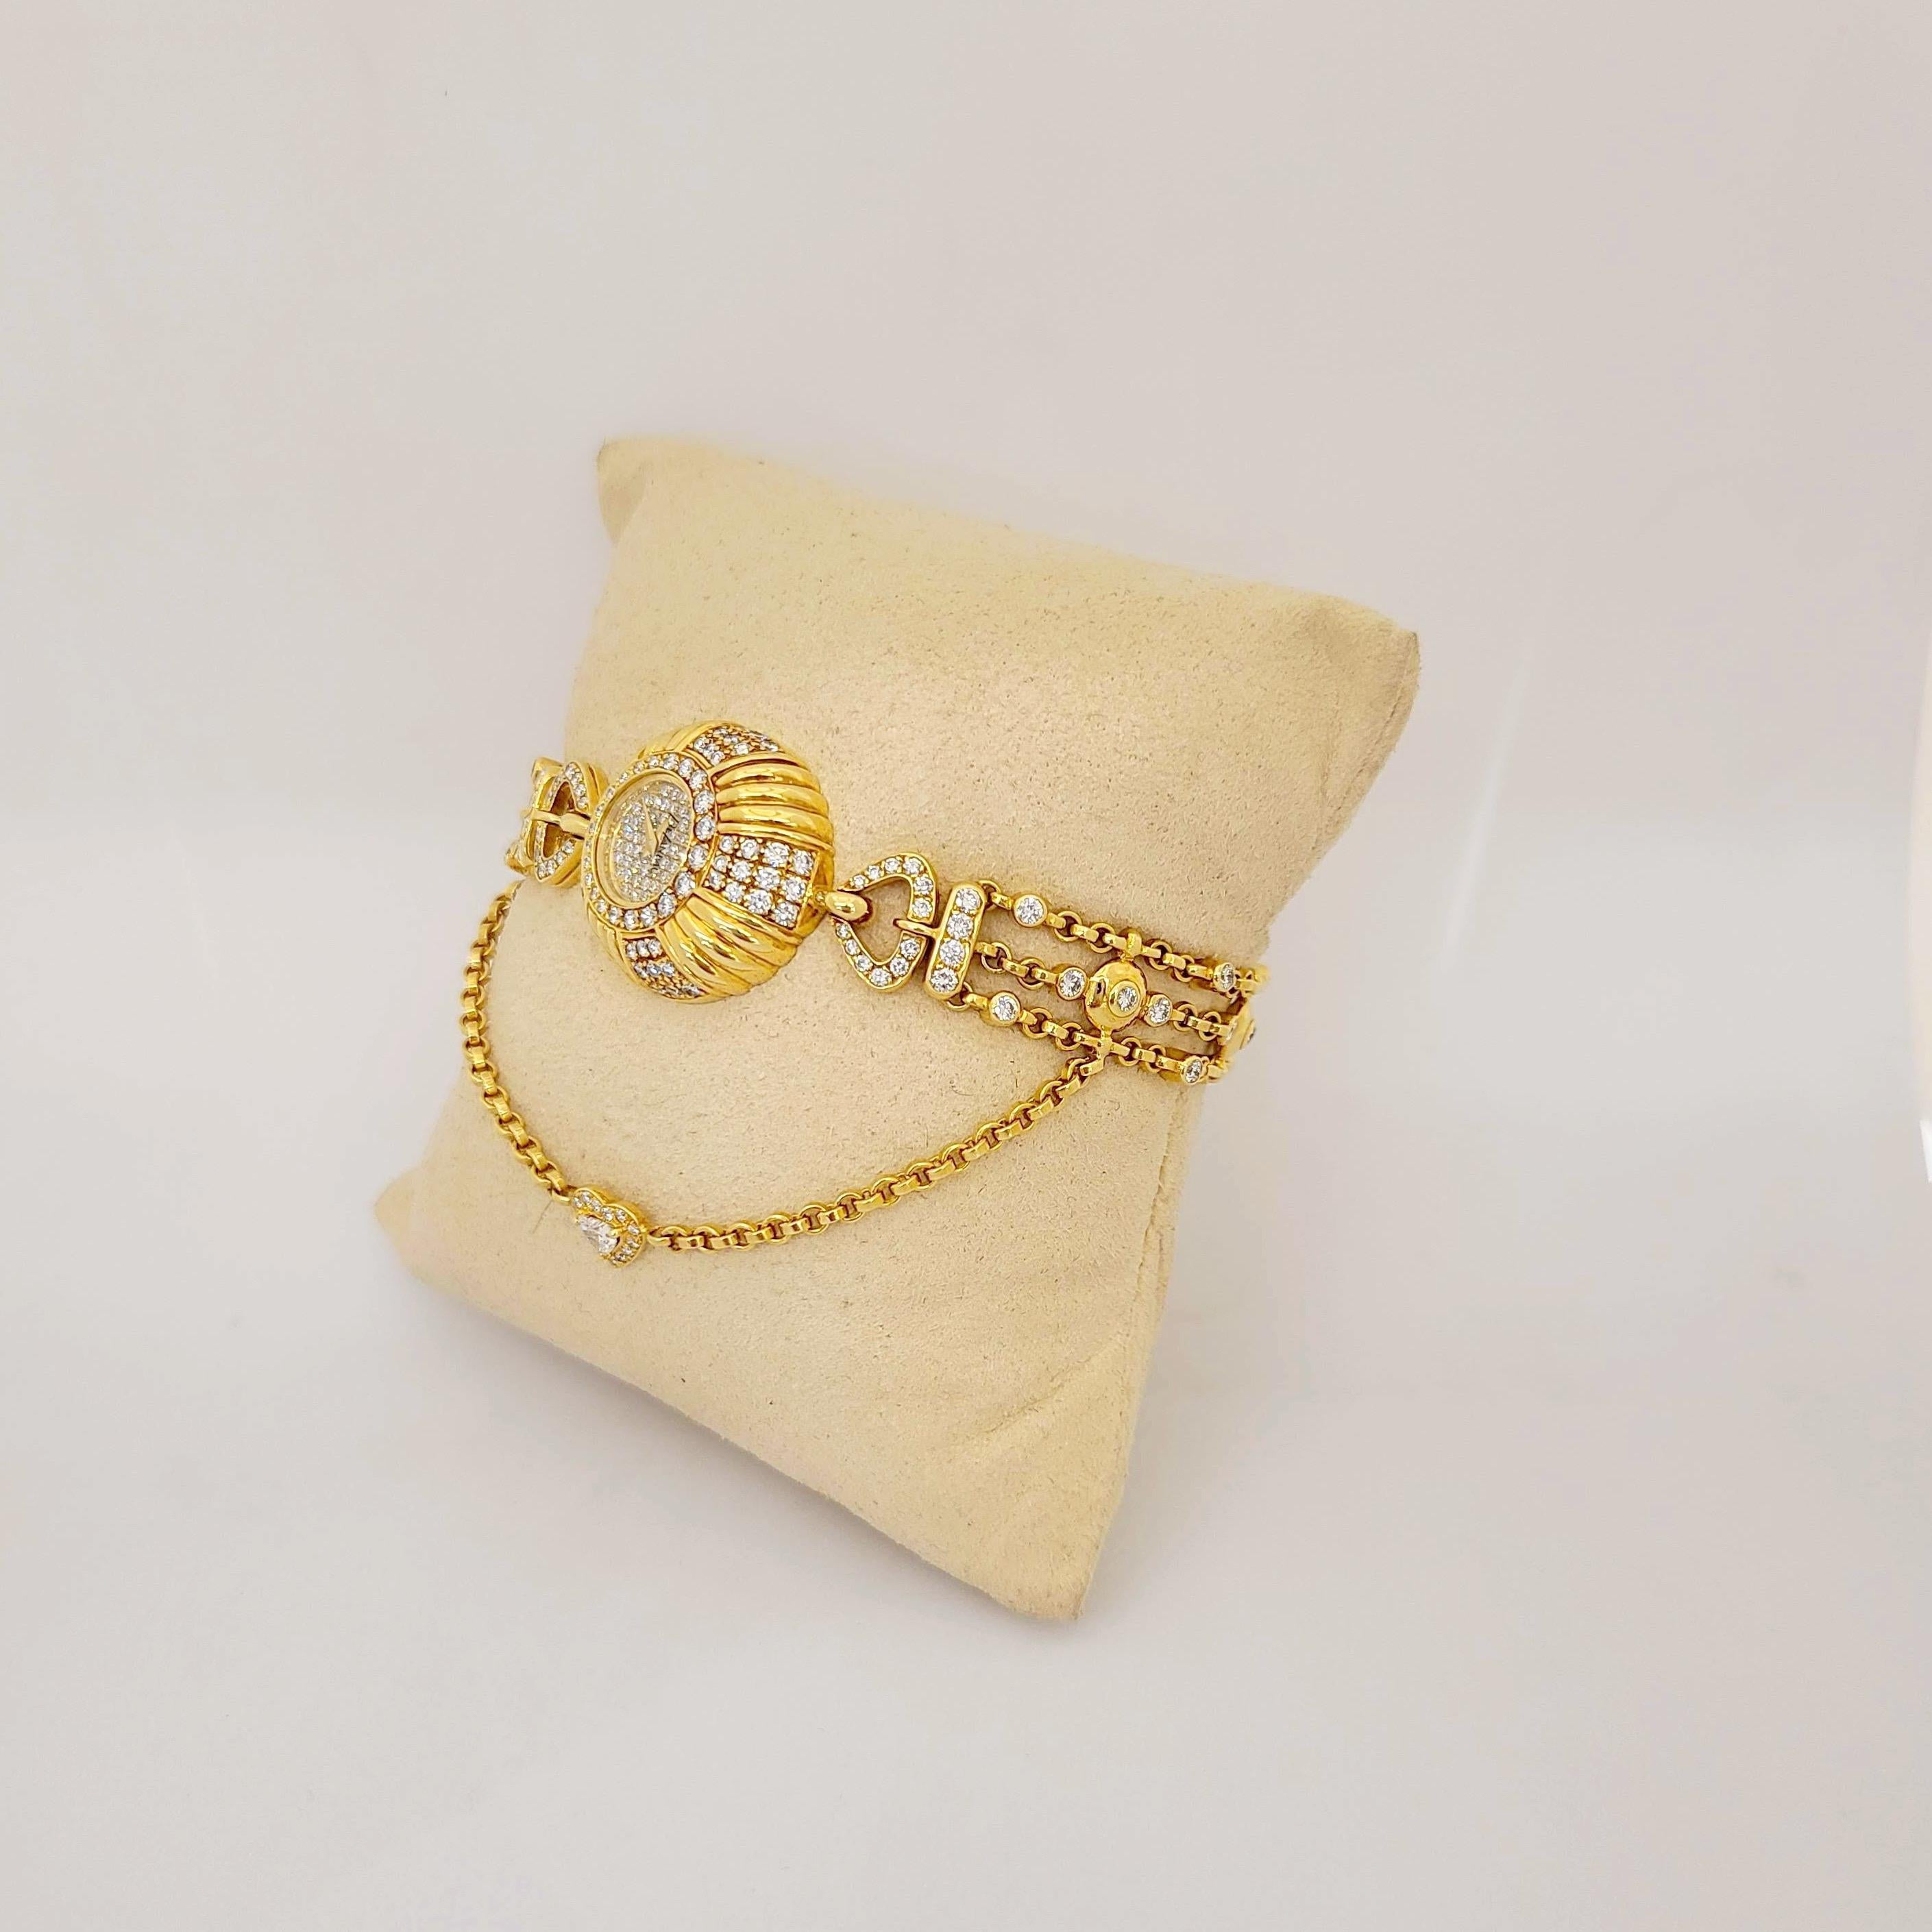 Delaneau 18 Karat Yellow Gold and 3.10 Carat Diamond Bracelet Watch For Sale 2